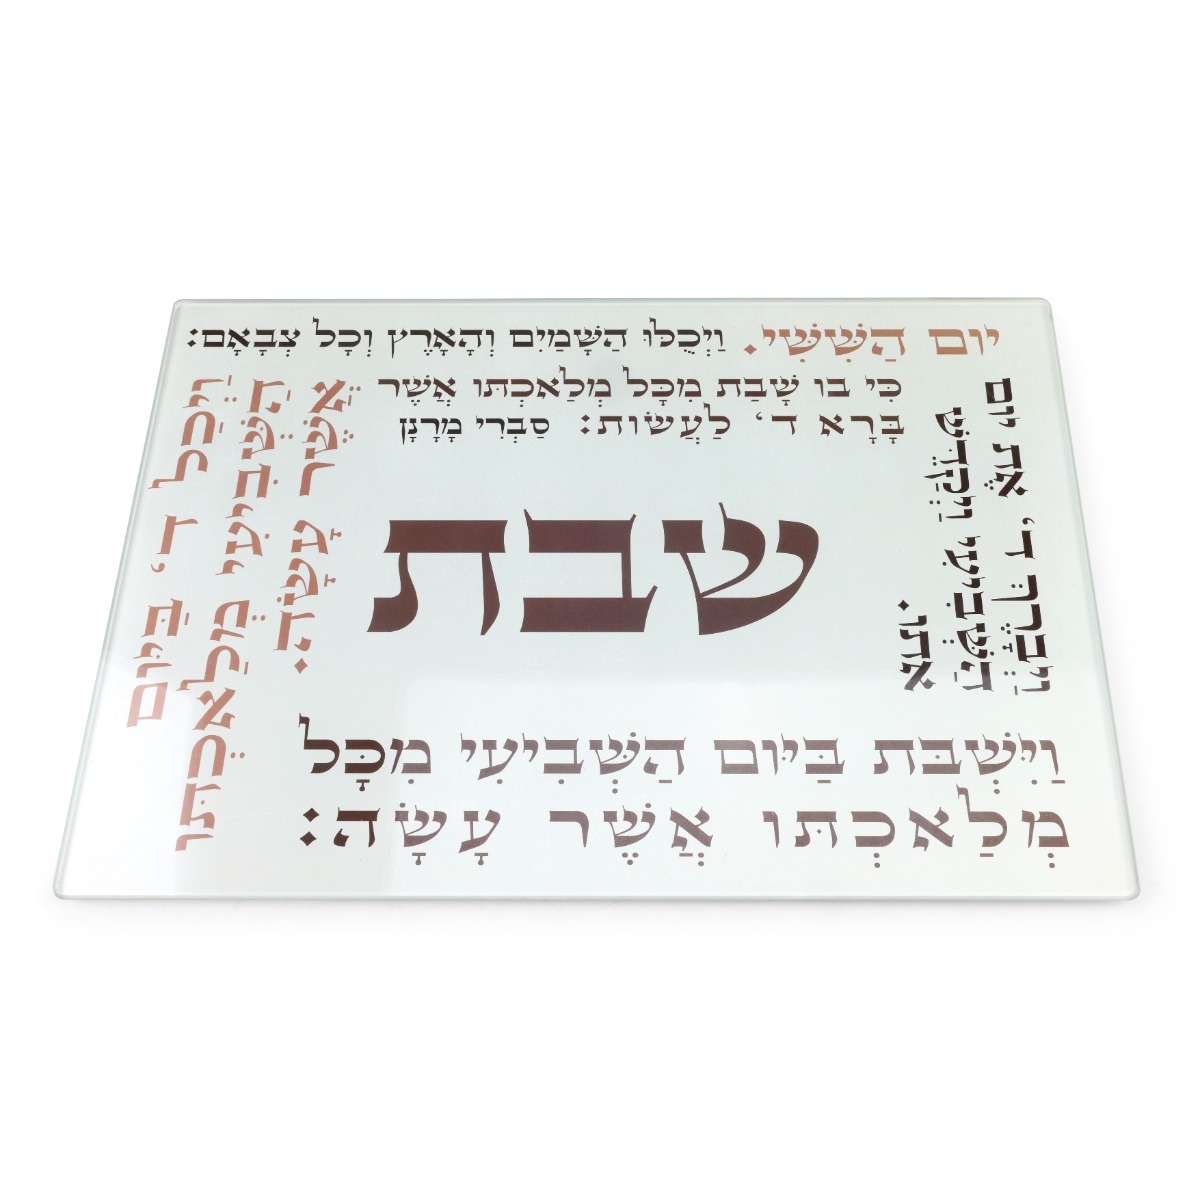 Tempered Glass Shabbat Challah Board with Kiddush Words - 1